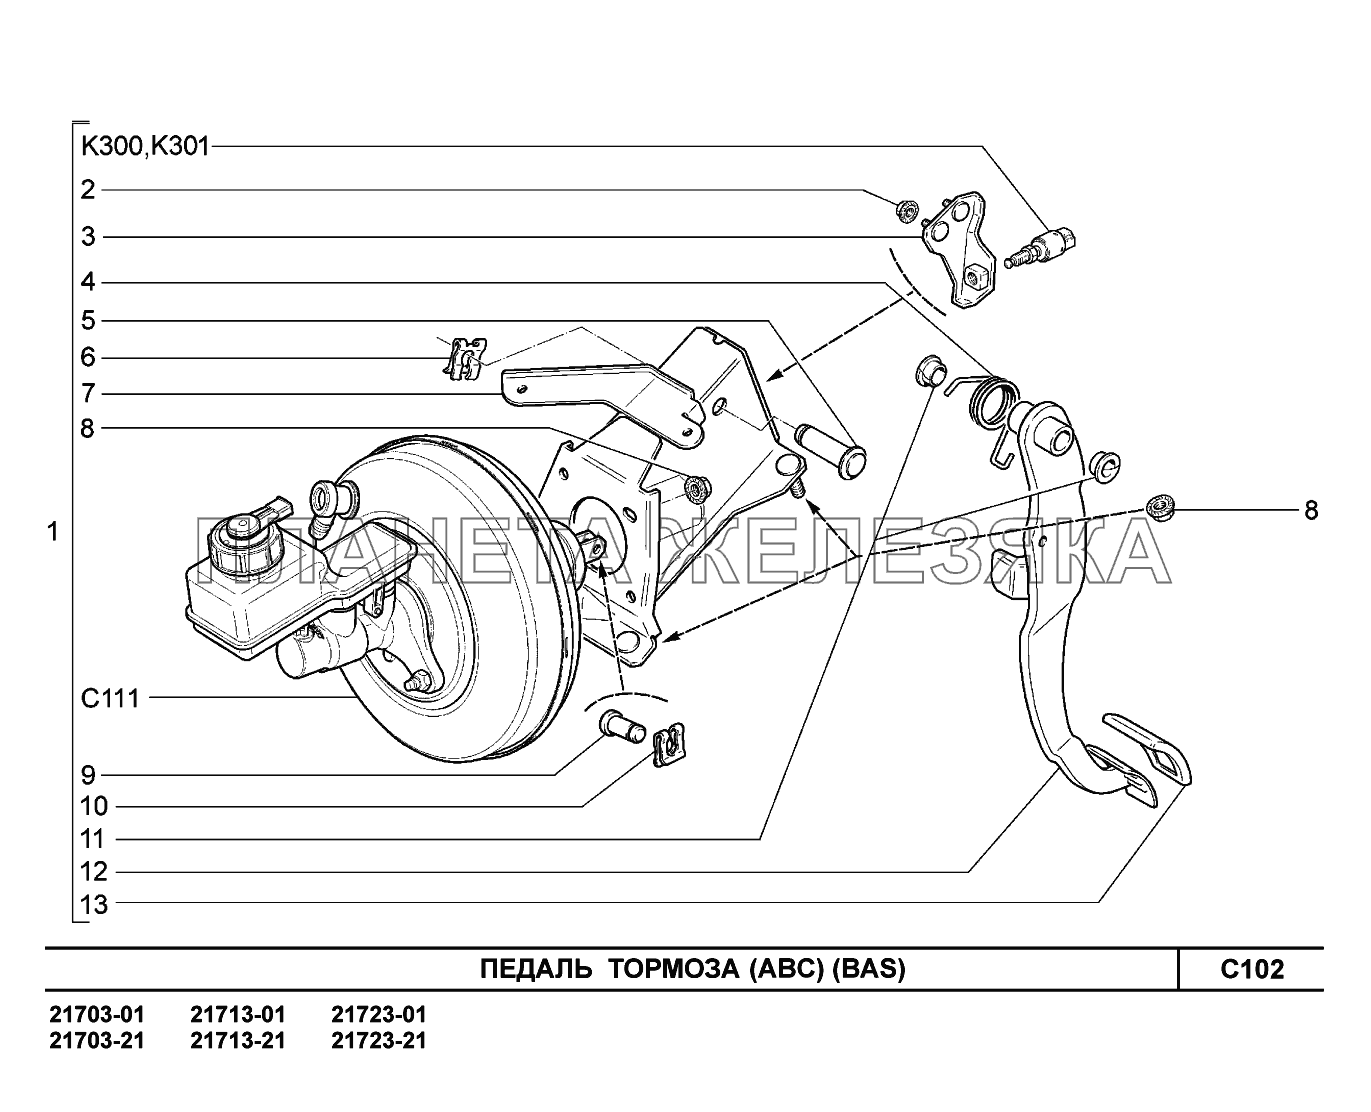 C102. Педаль тормоза ВАЗ-2170 